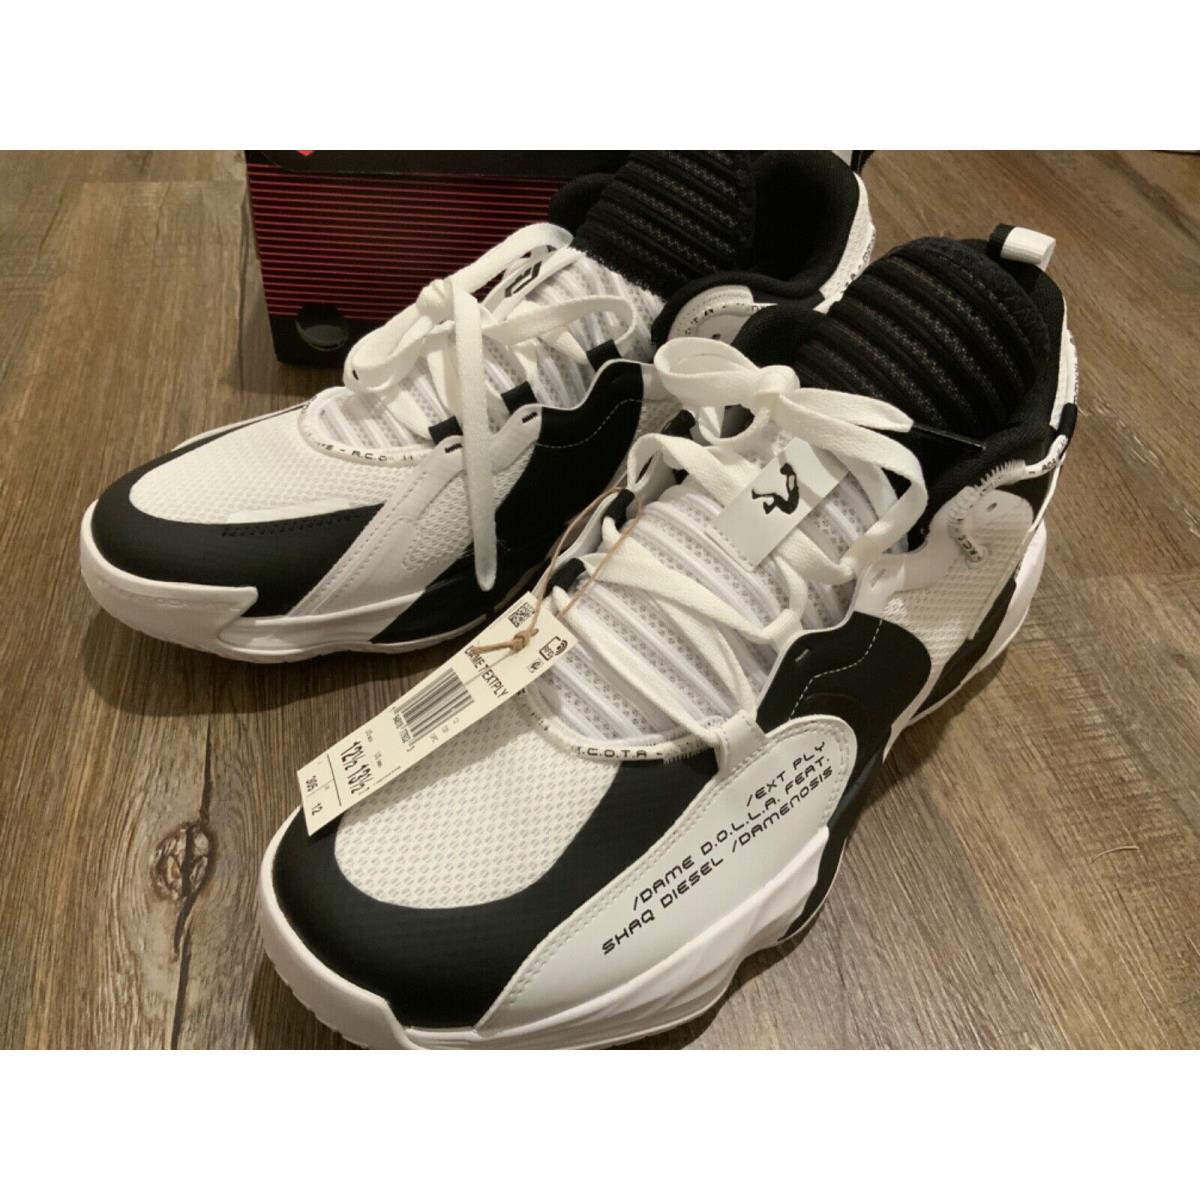 Adidas shoes Dame Lillard - White 0